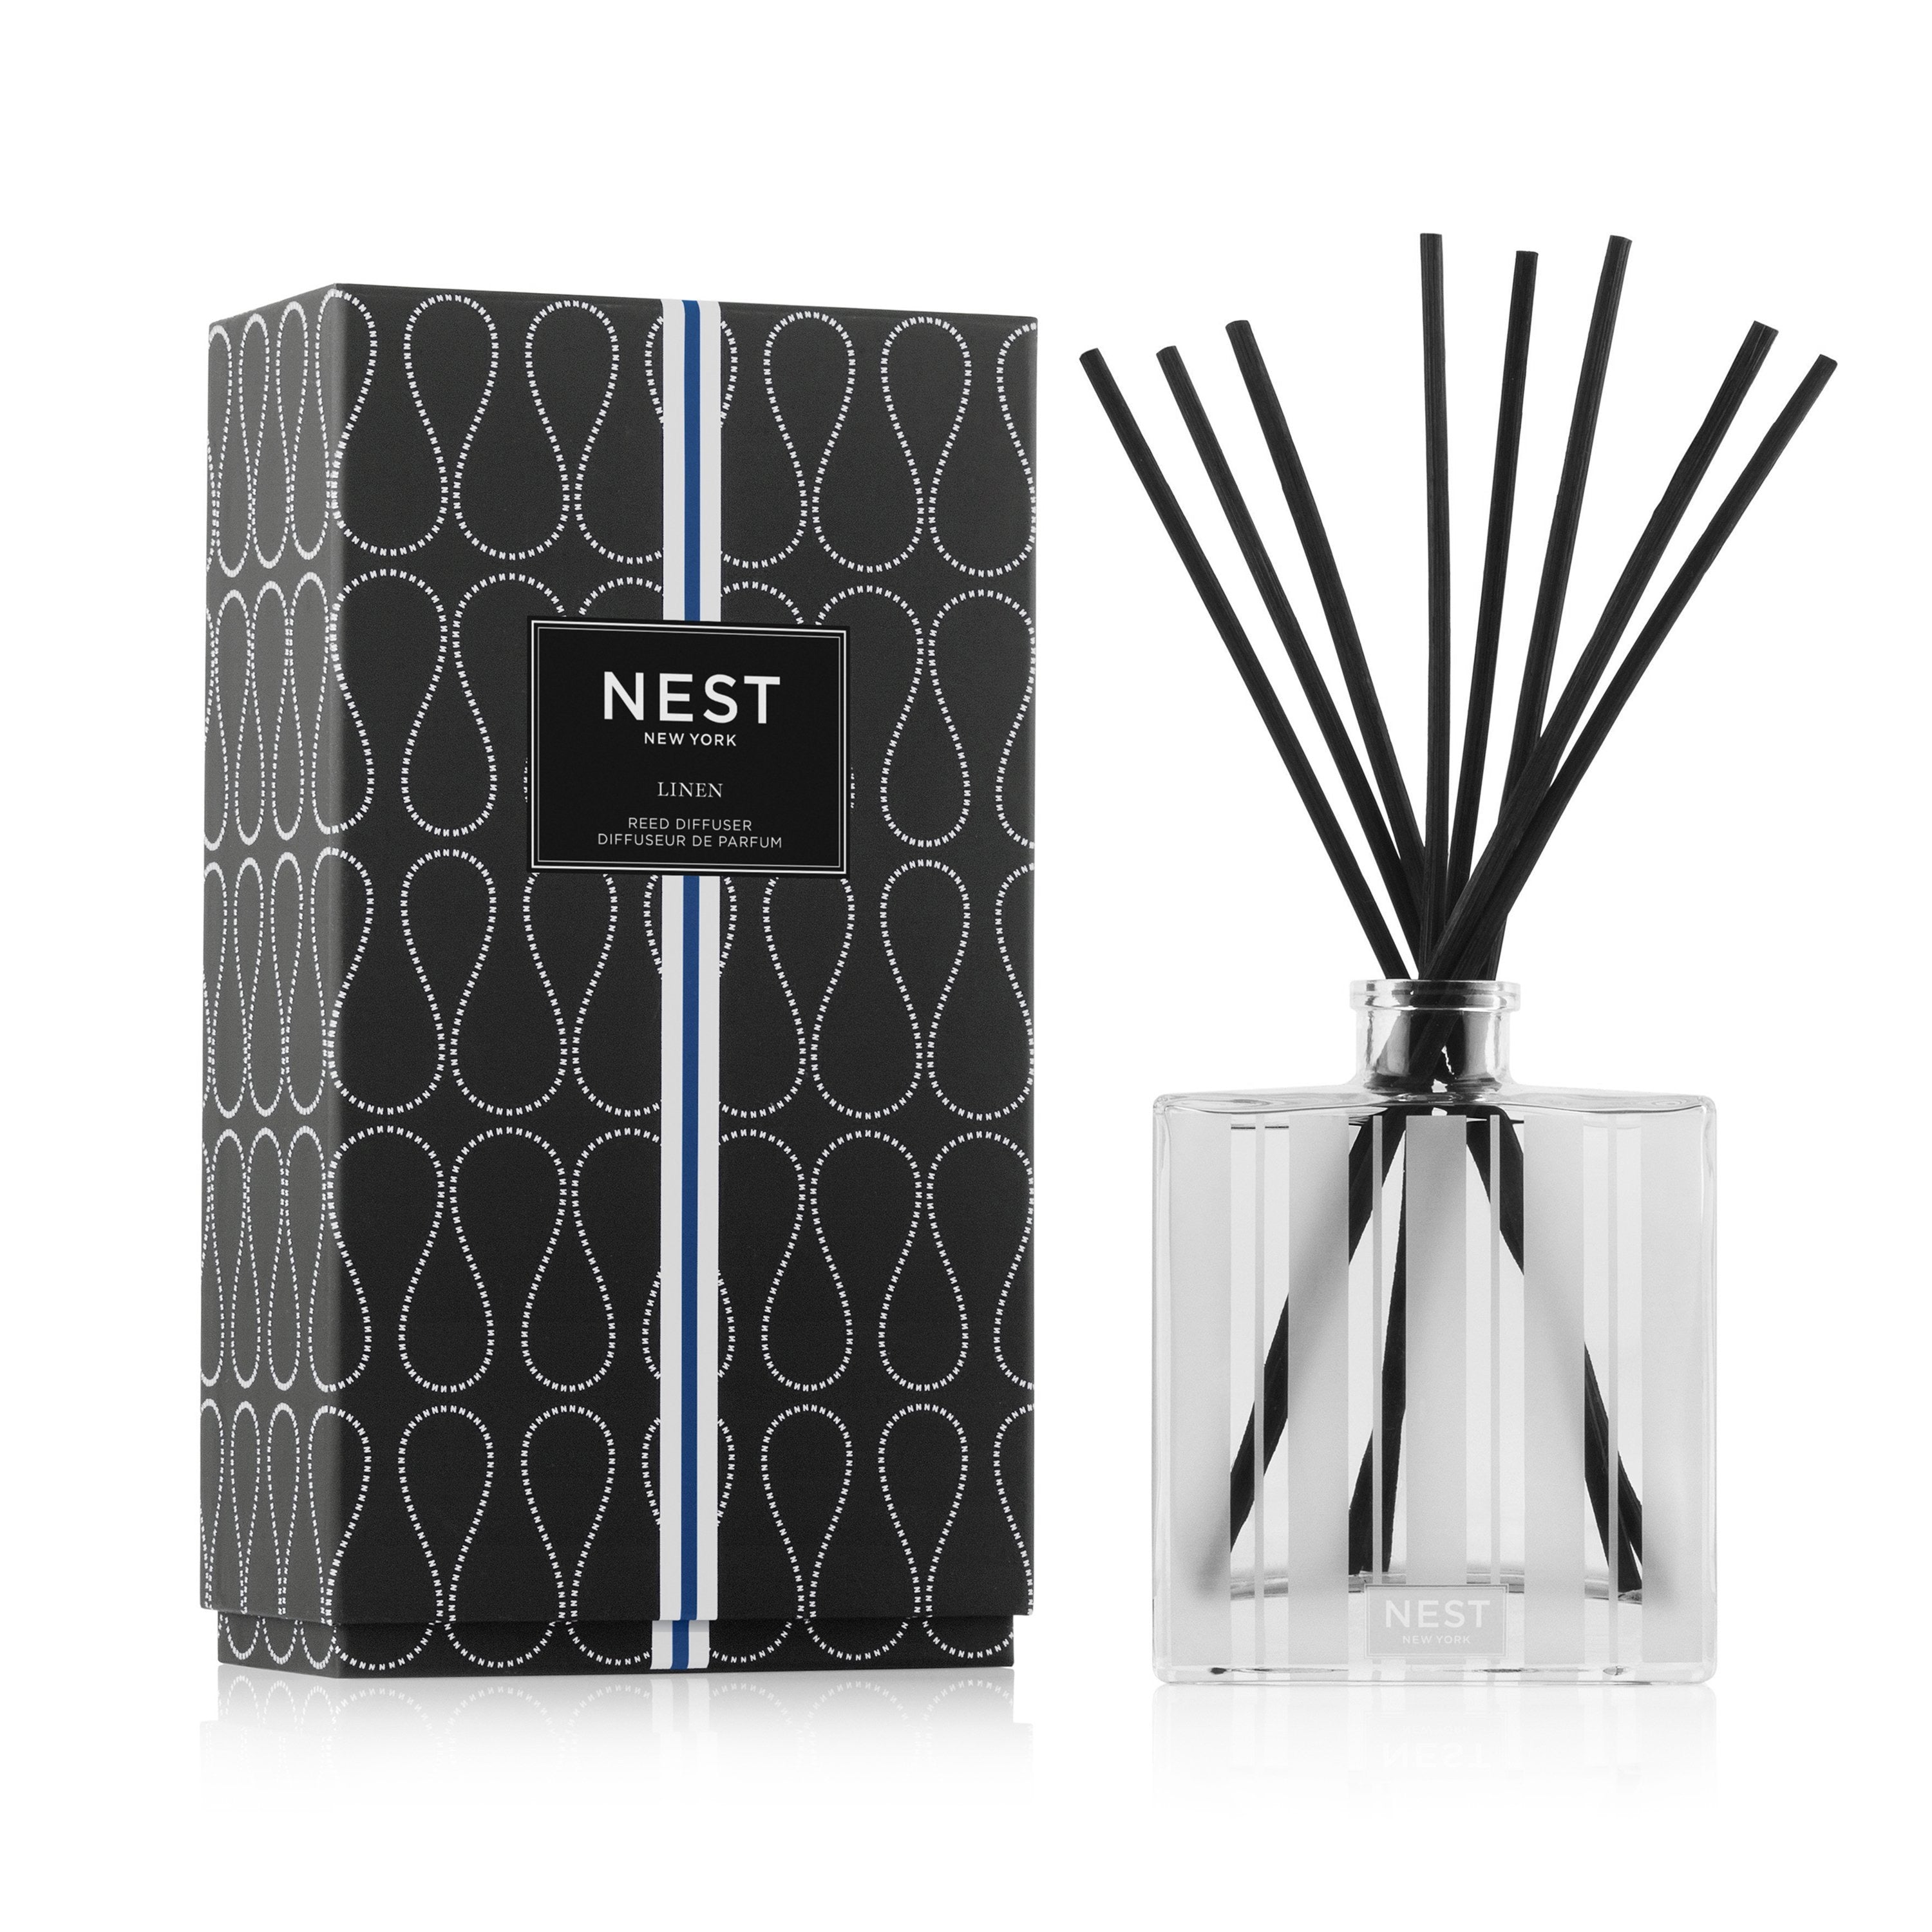 Nest Luxury Linen Reed Diffuser